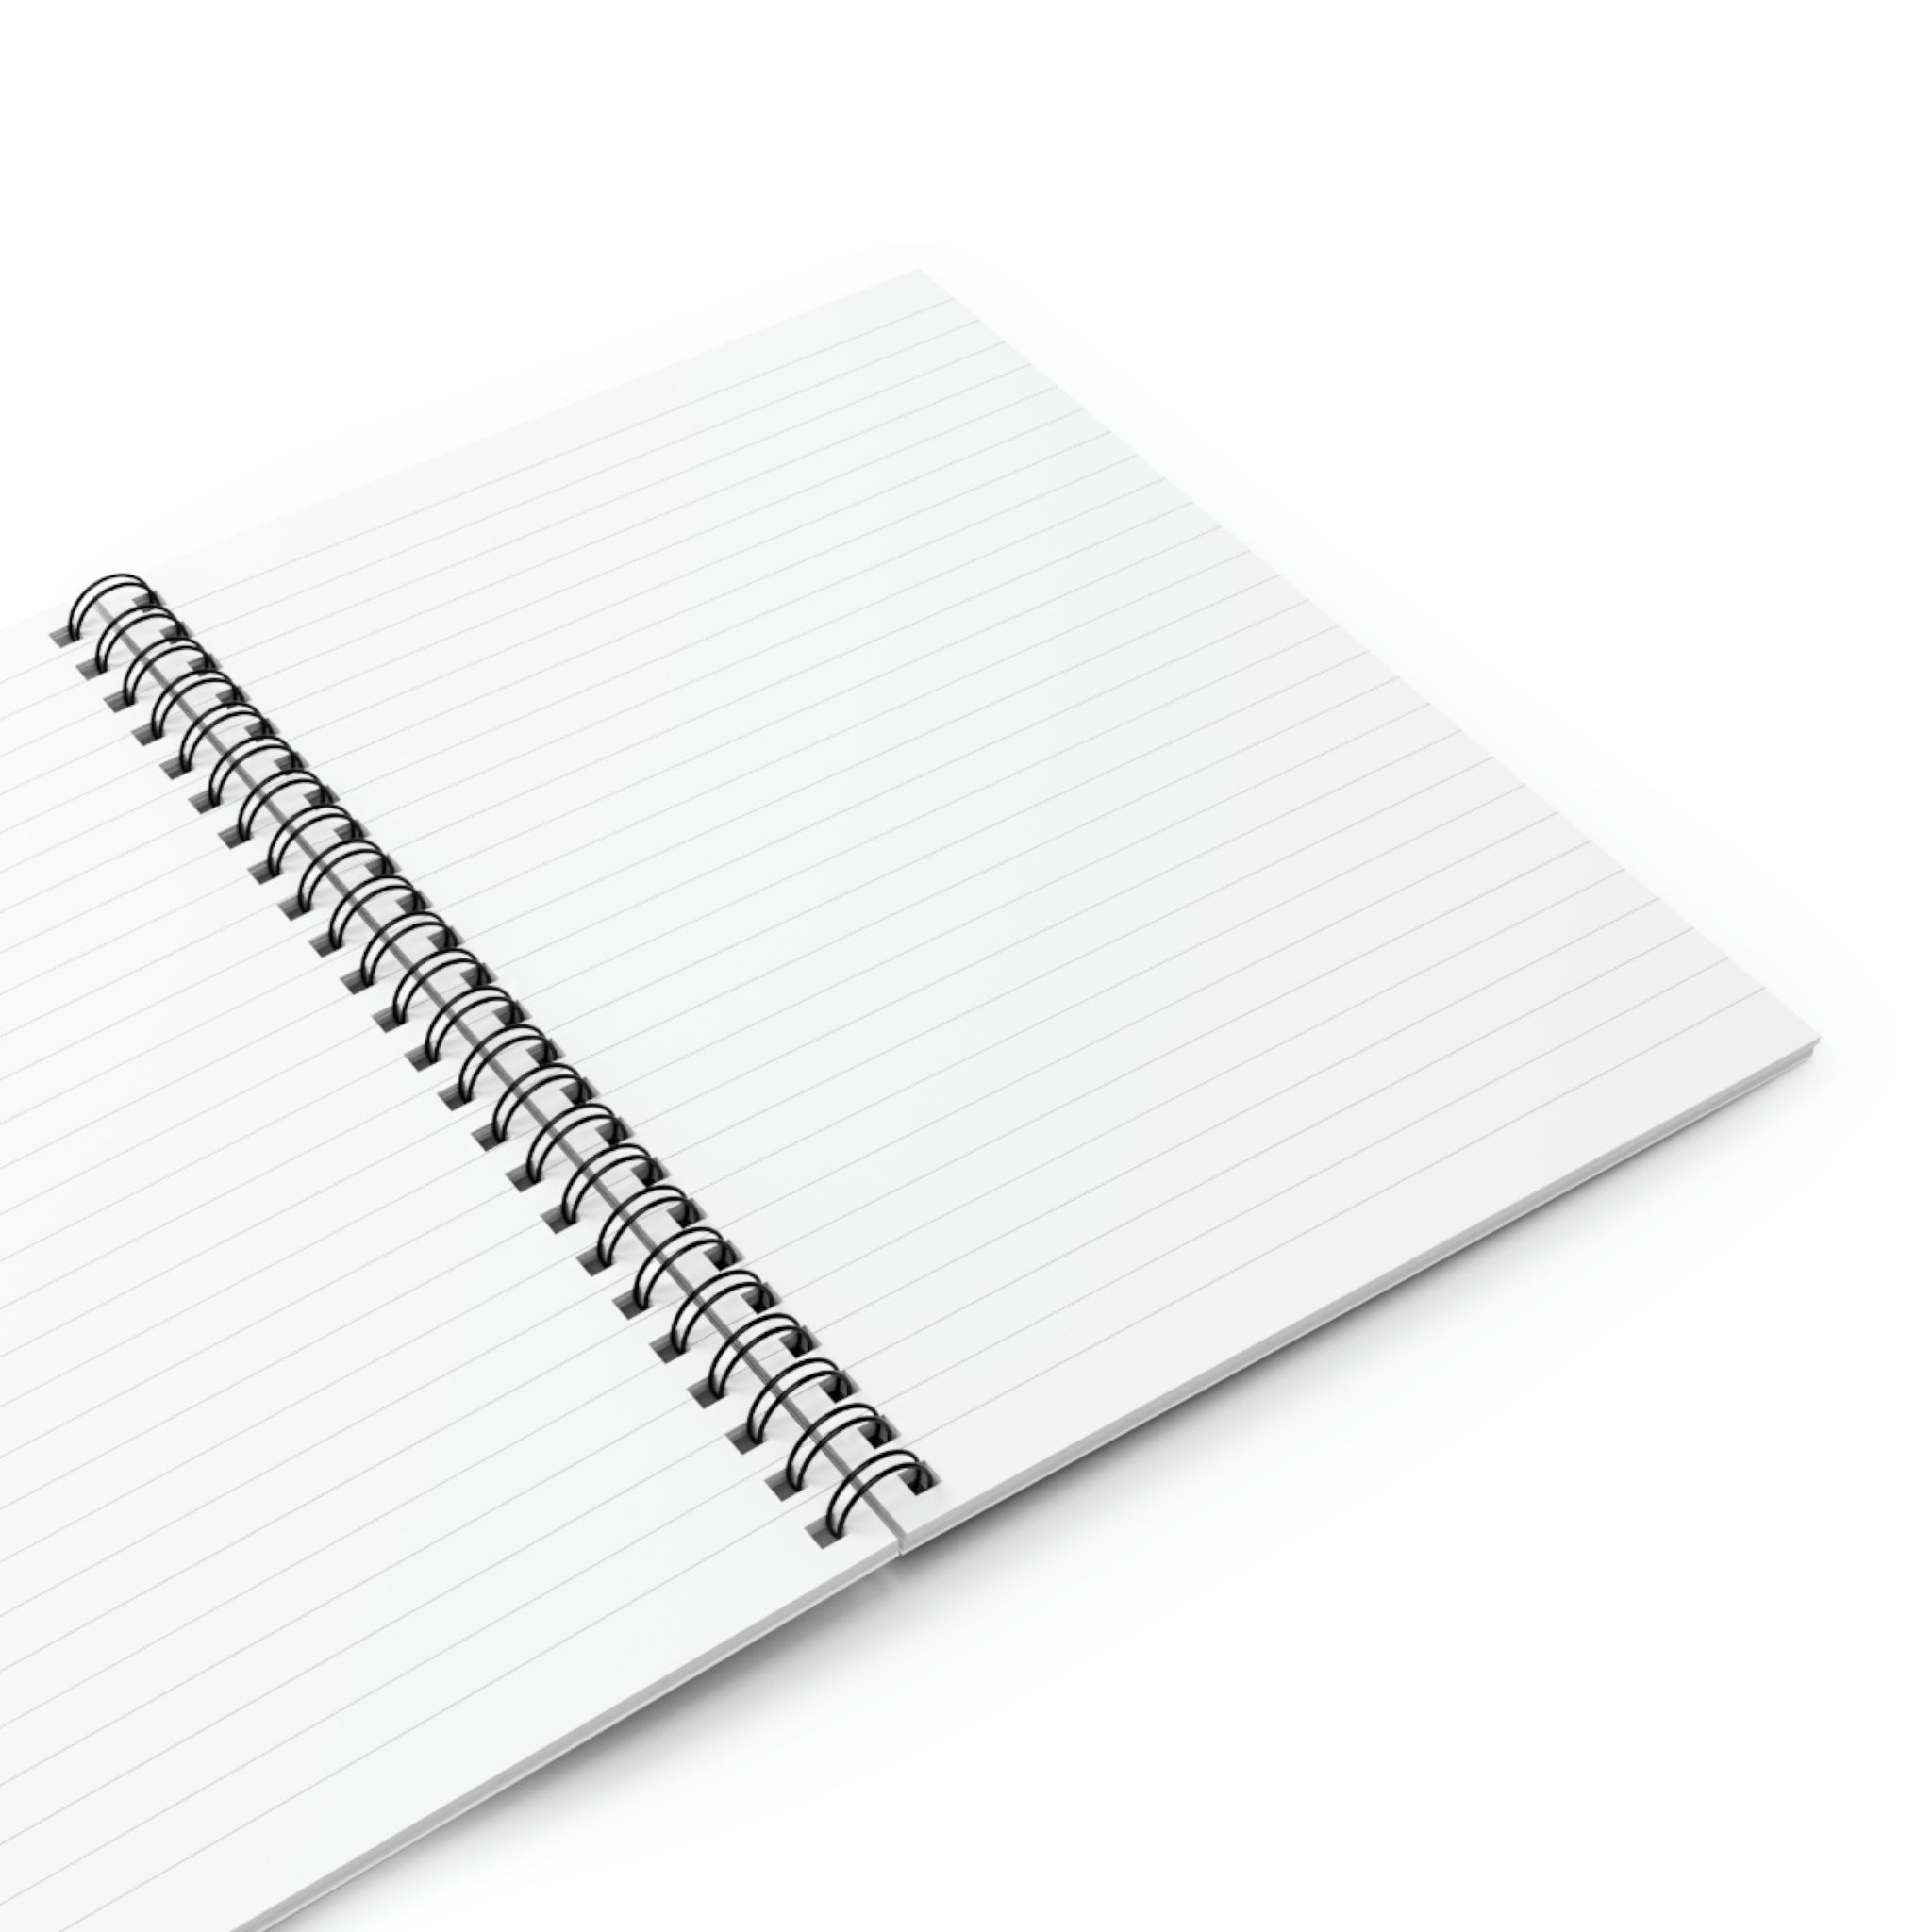 Cane Spiral Notebook - Ruled Line